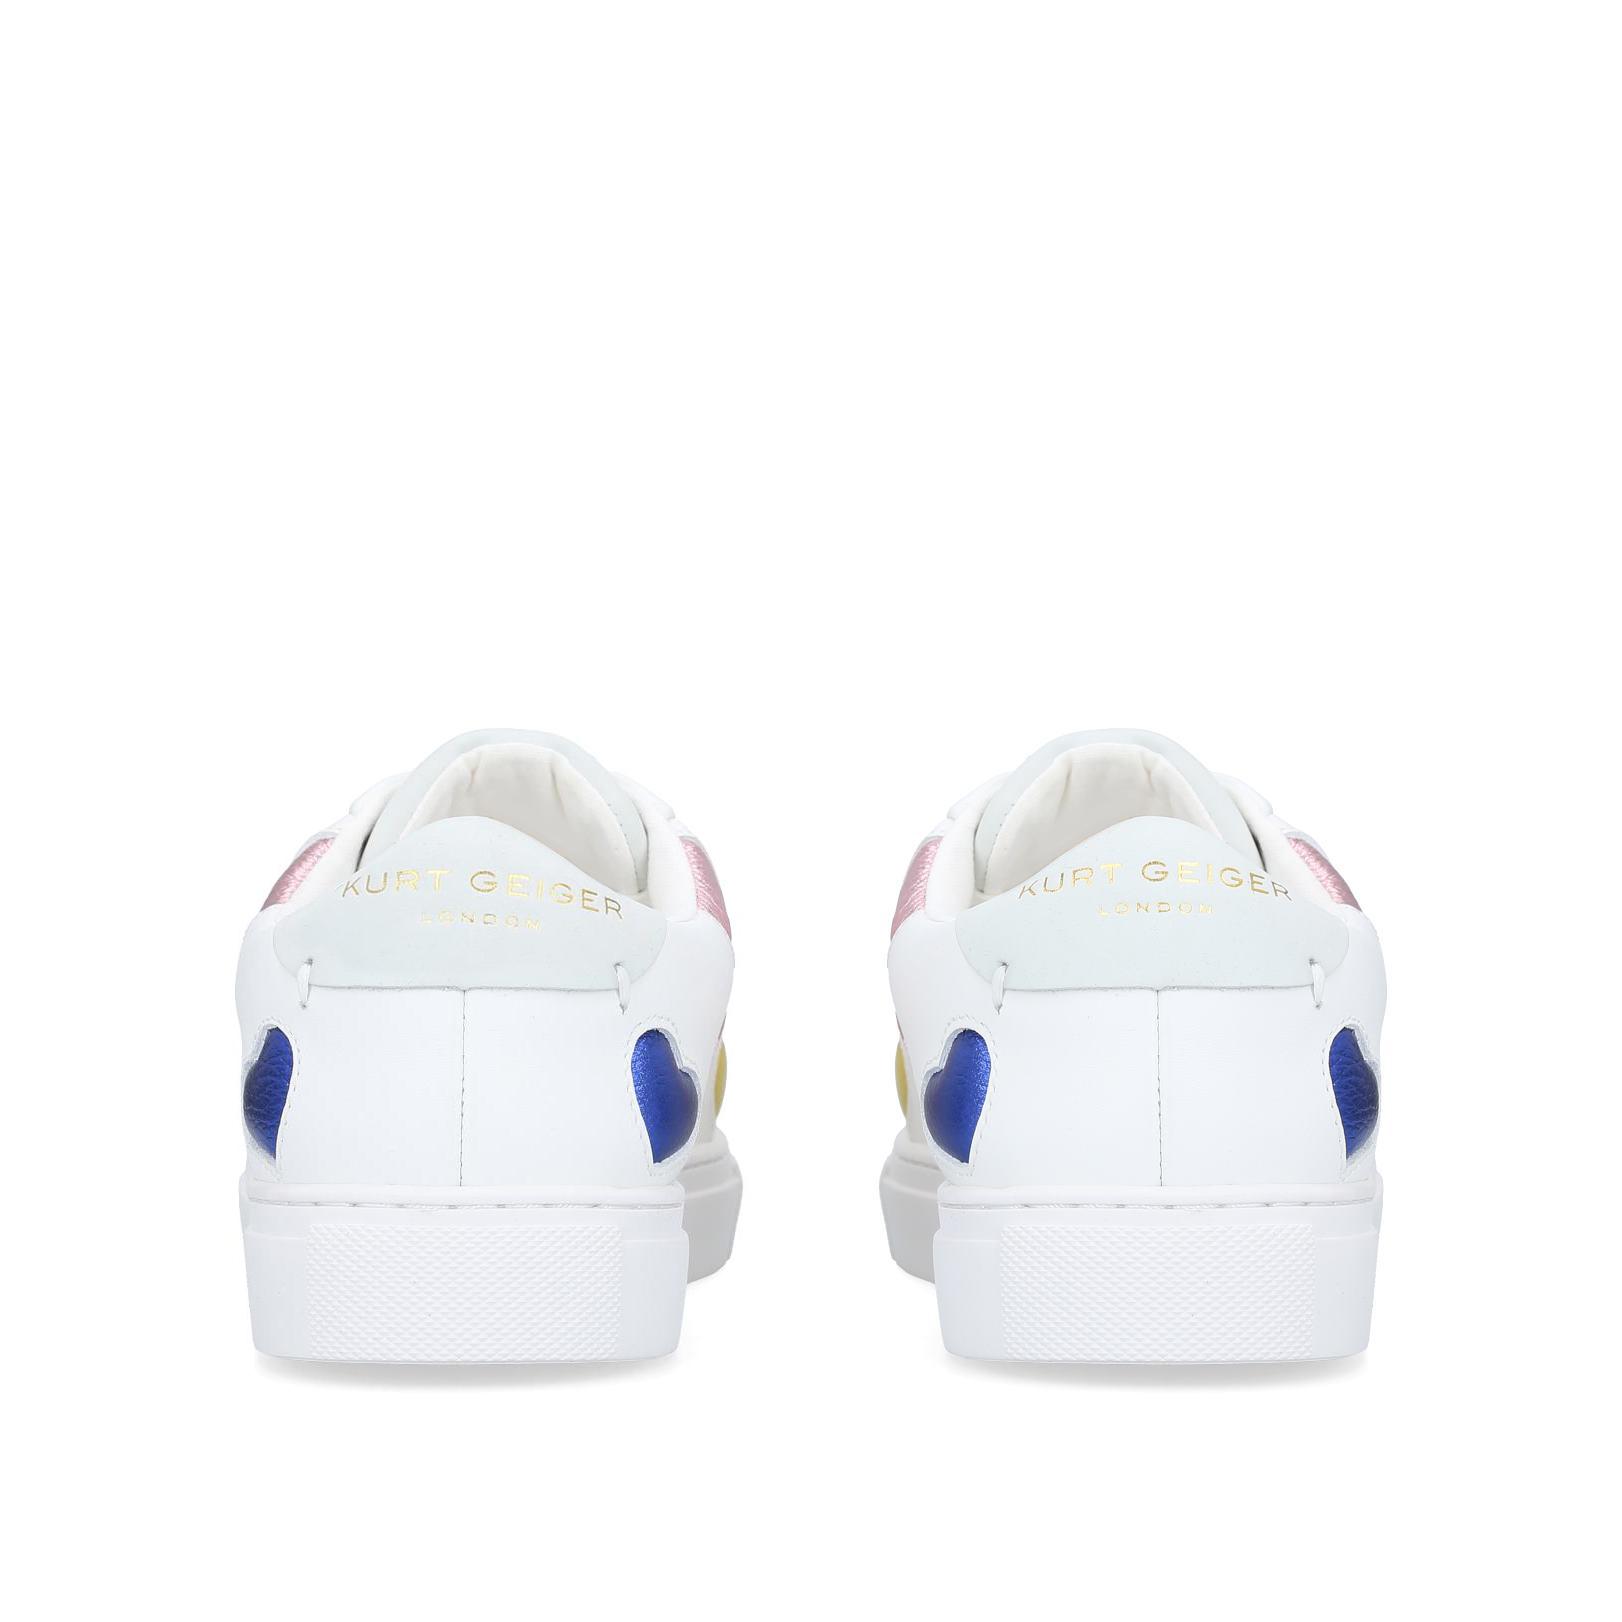 LANE LOVE White Heart Detail Sneakers by KURT GEIGER LONDON